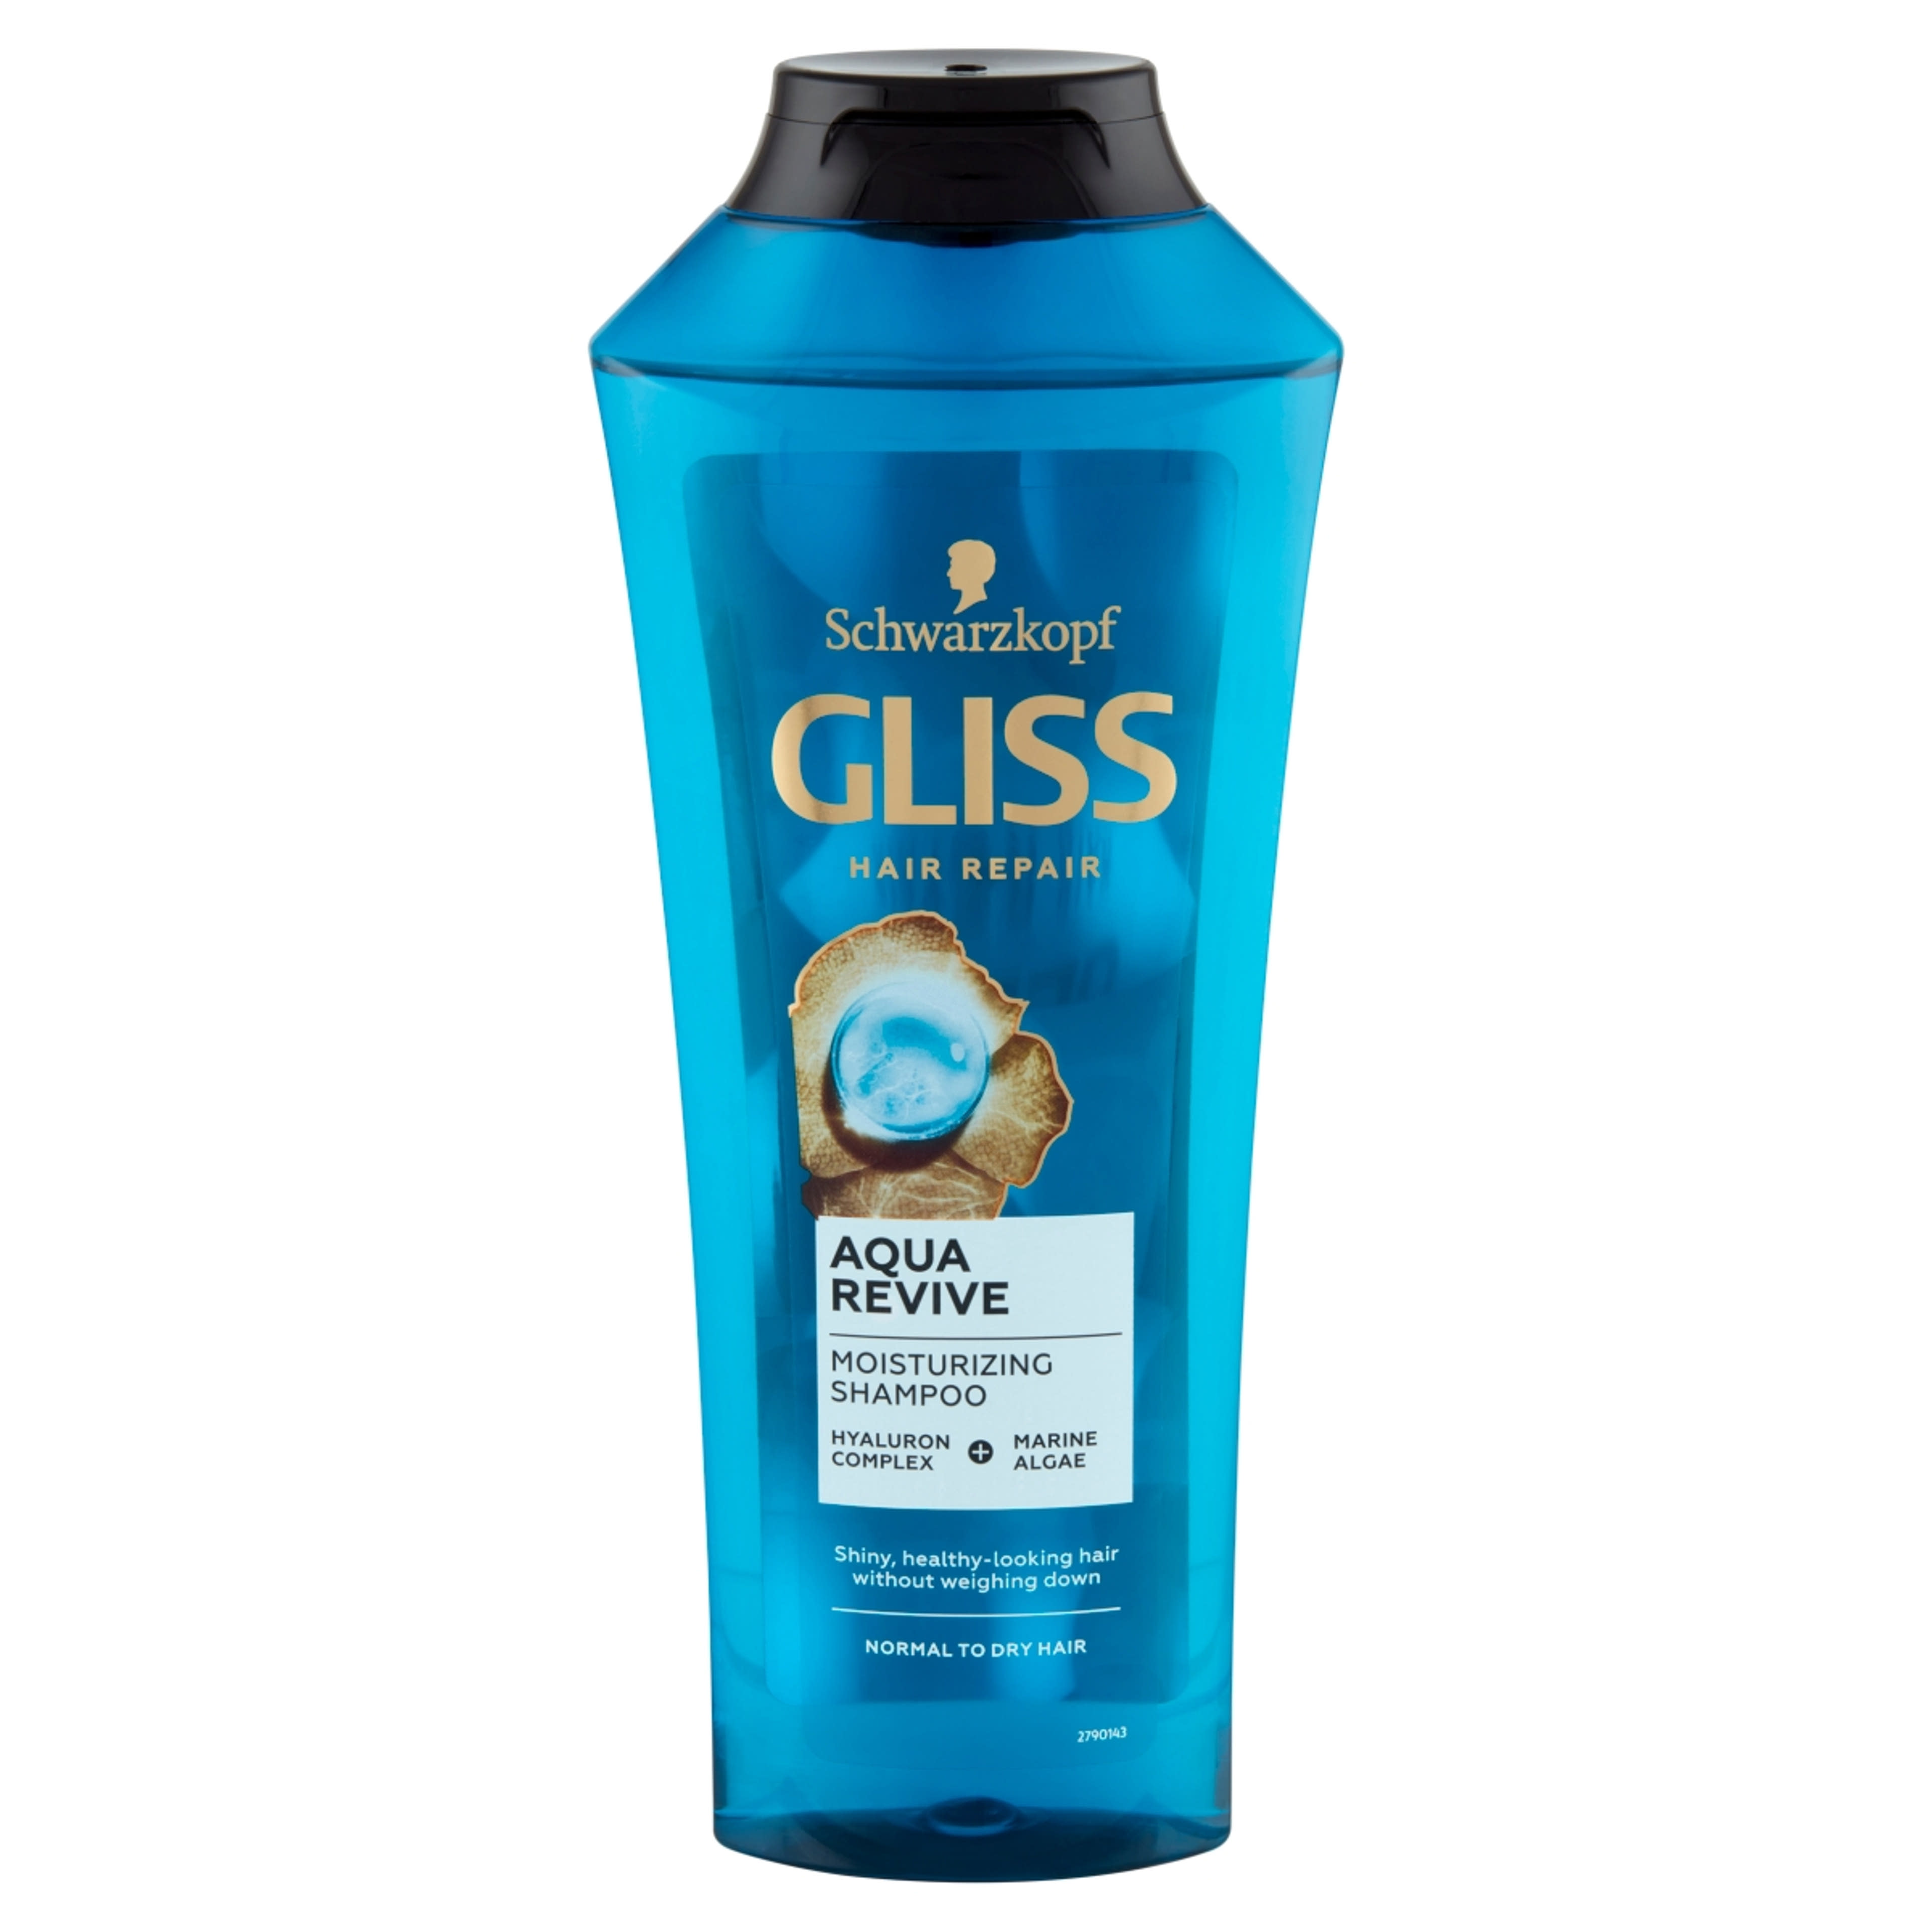 Gliss Aqua Revive sampon - 400 ml-2